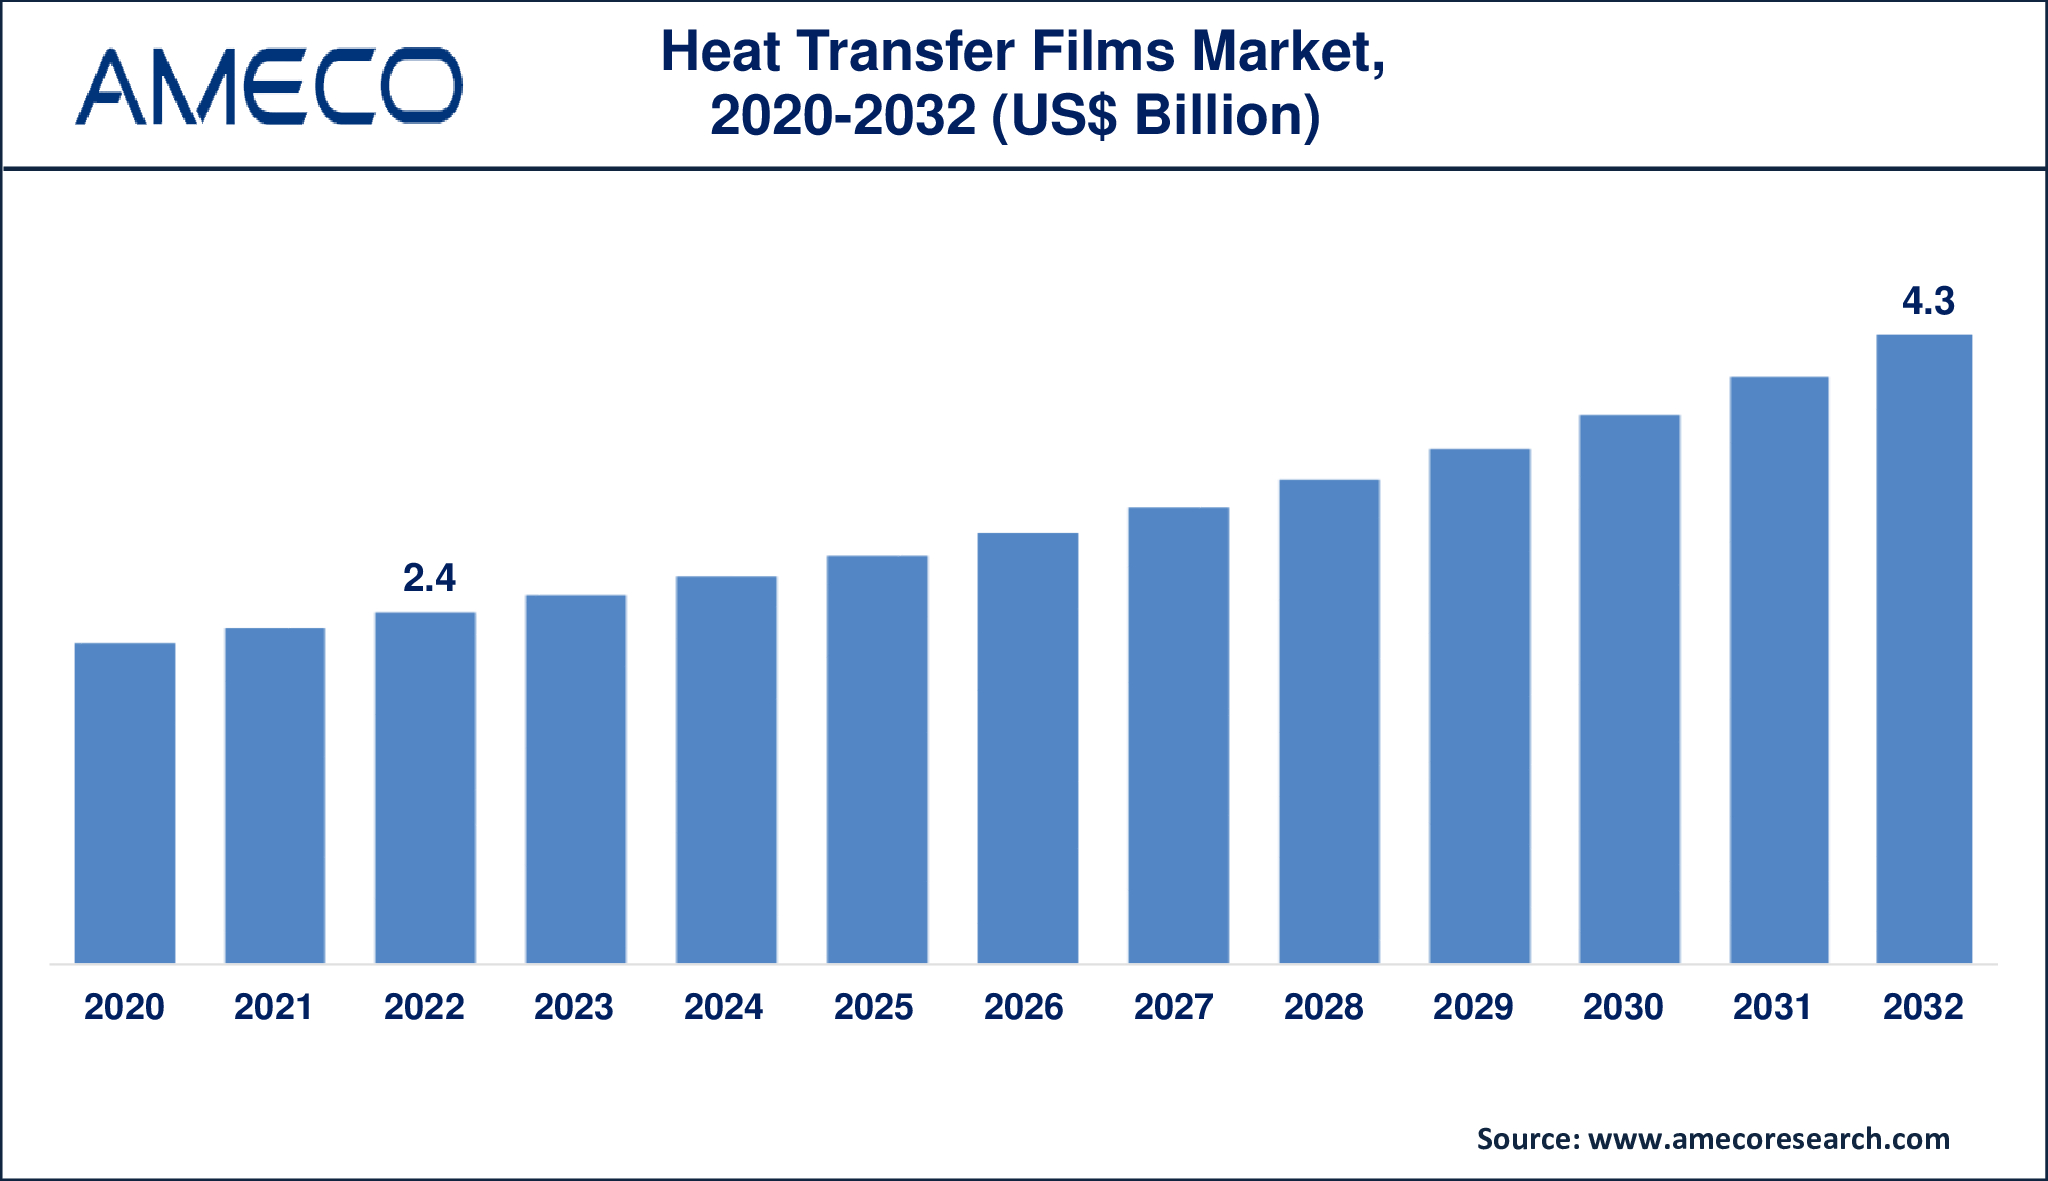 Heat Transfer Films Market Dynamics